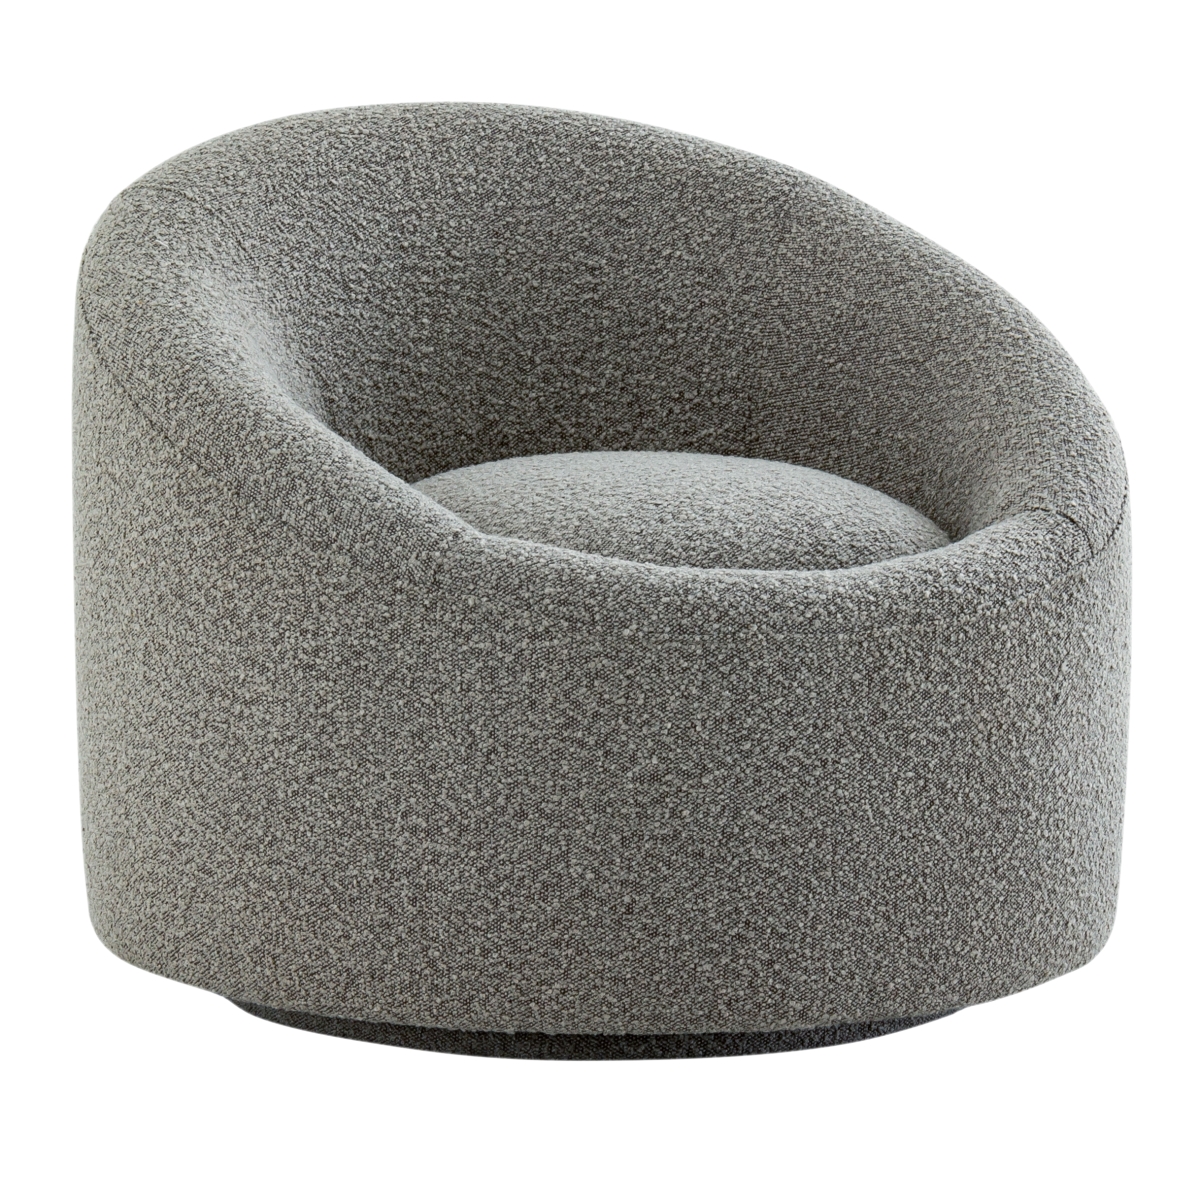 Pzw-993 Sienna Collection Modern Swivel Chair, Grey